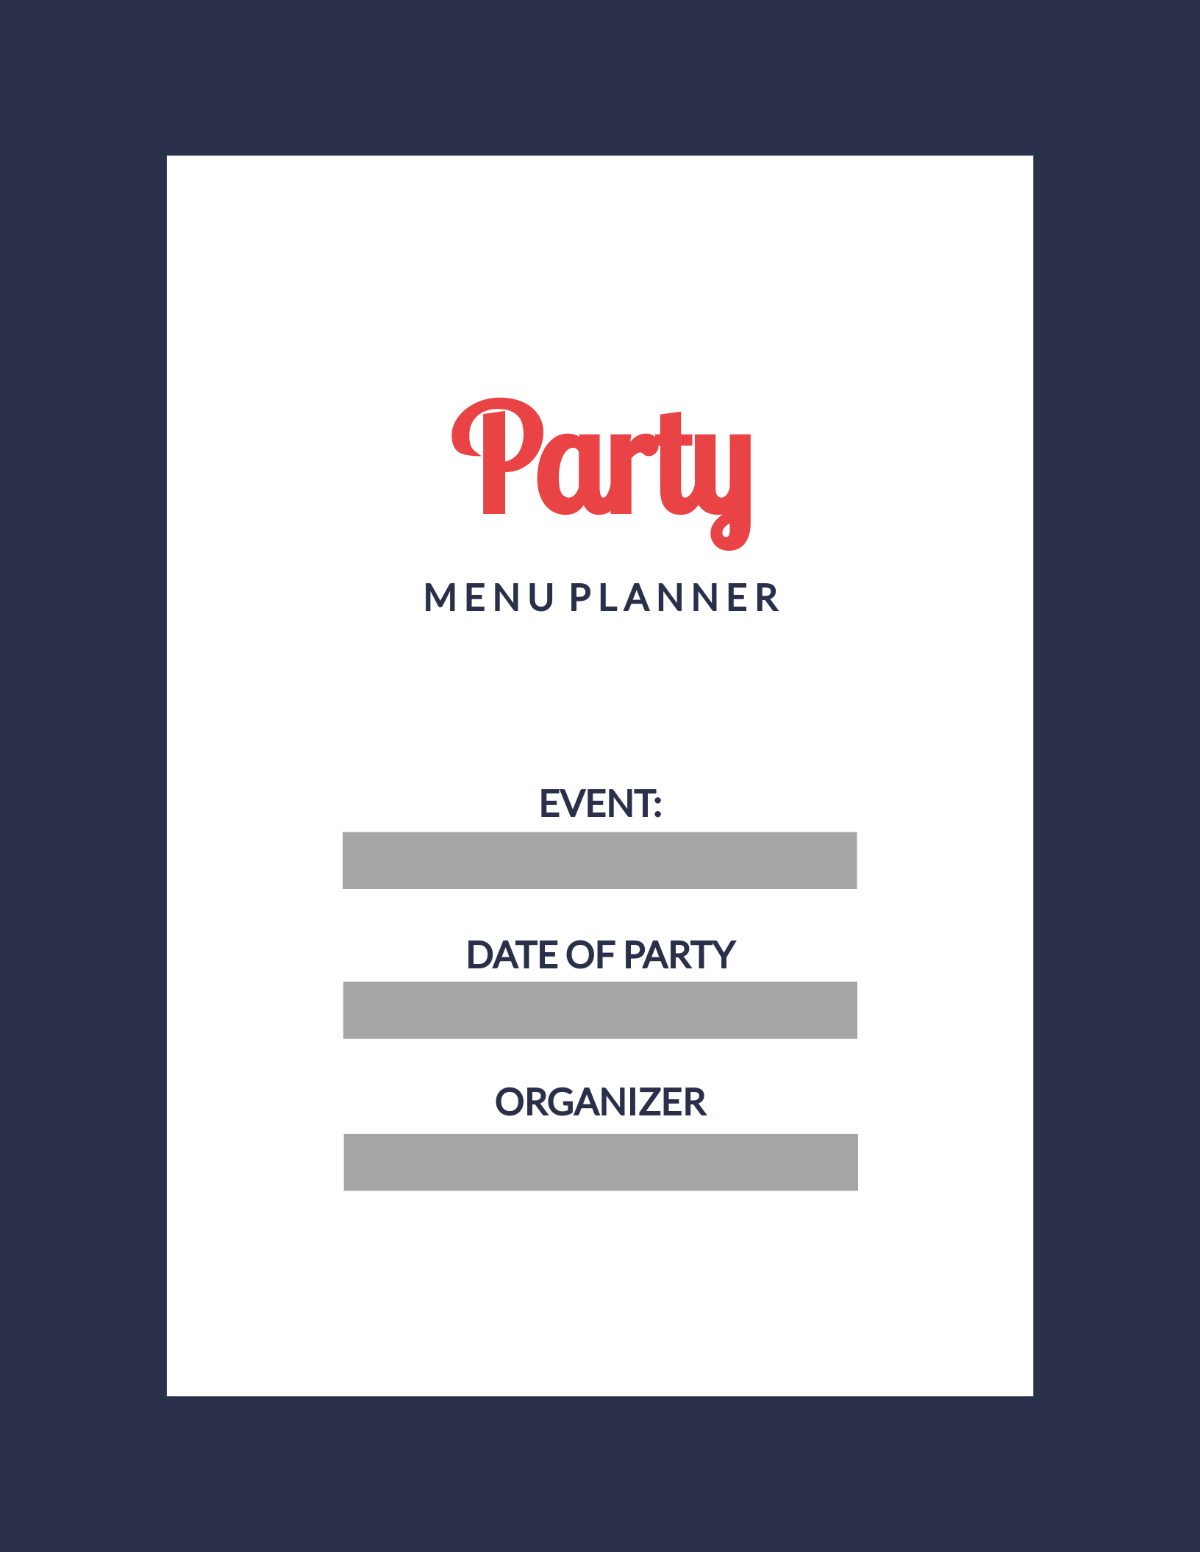 Party Menu Planner Template